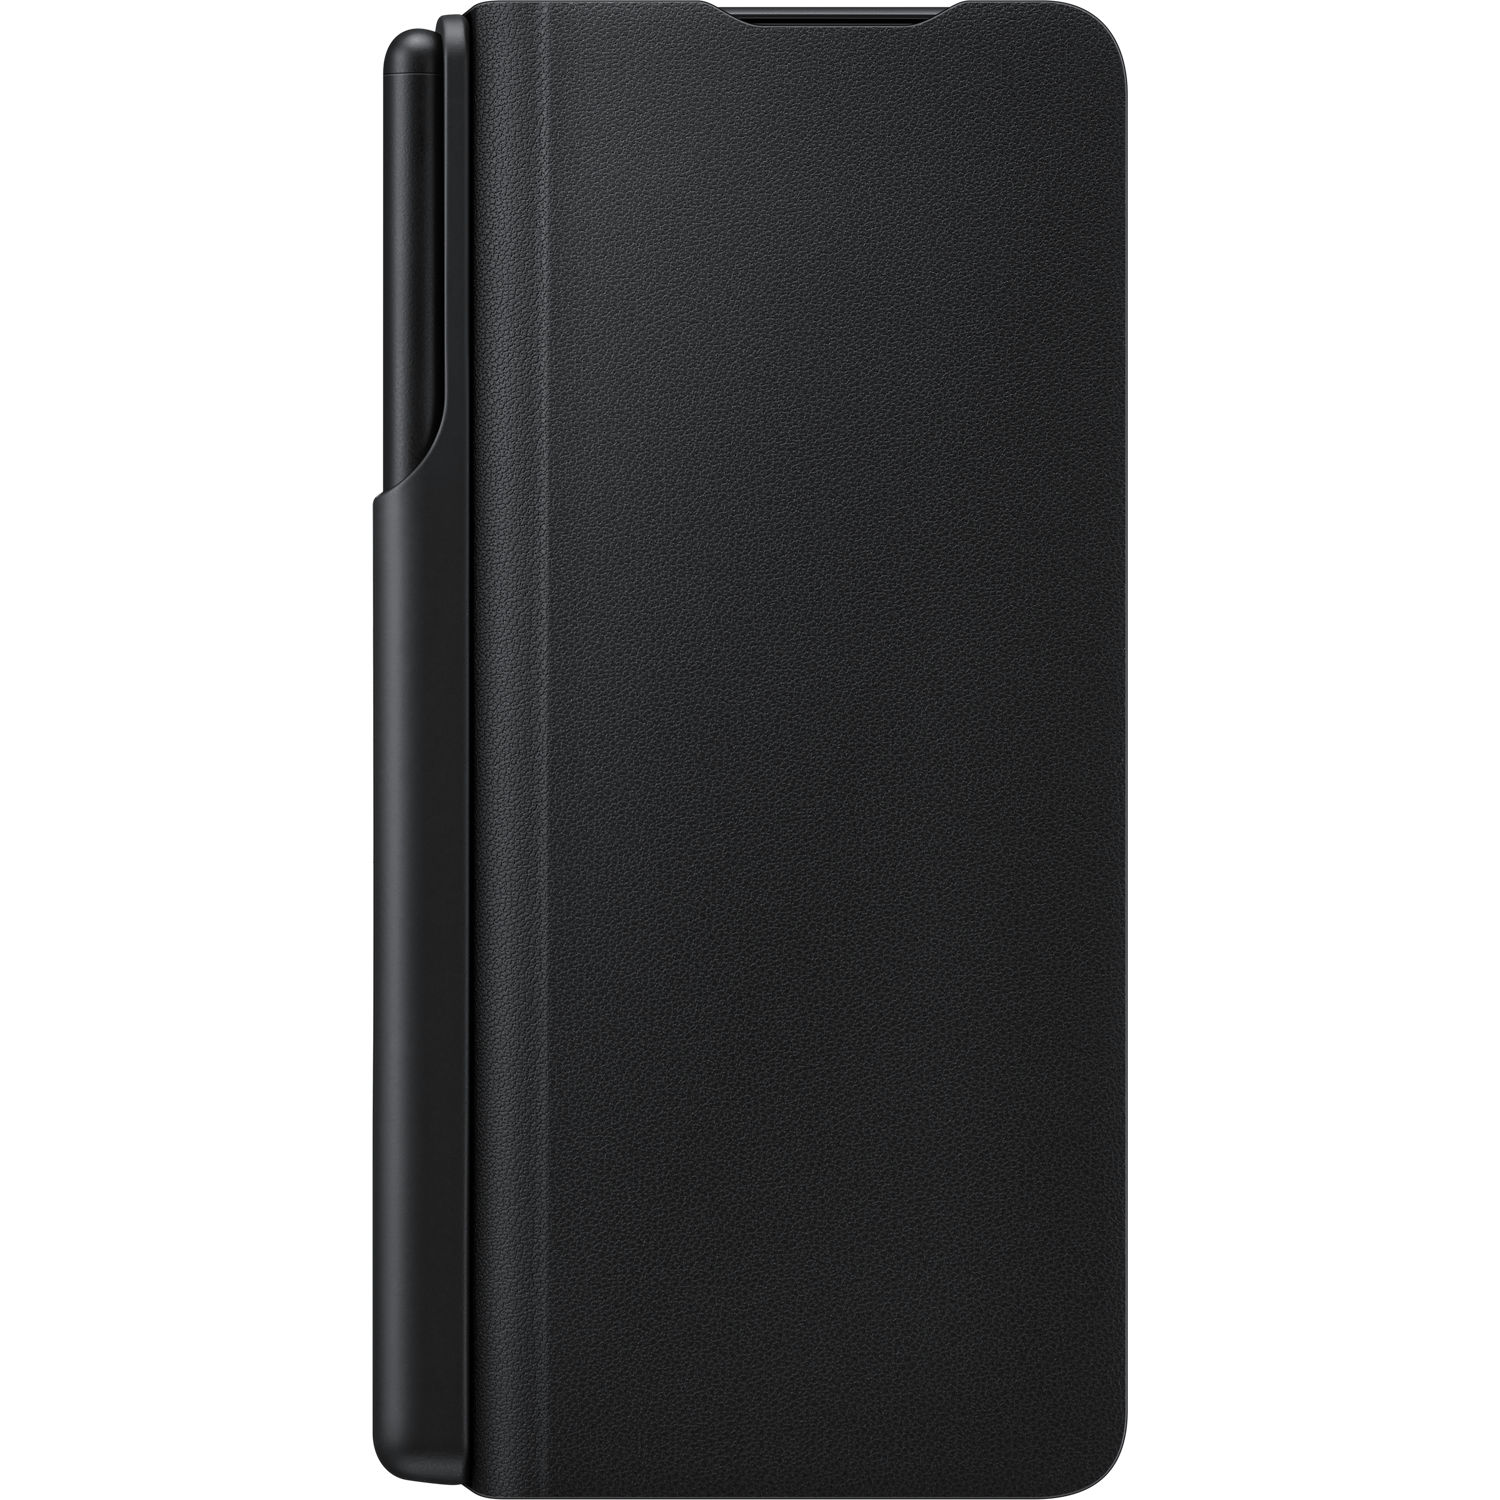 VERZION | Samsung Z fold 3 case with S pen | $4.99